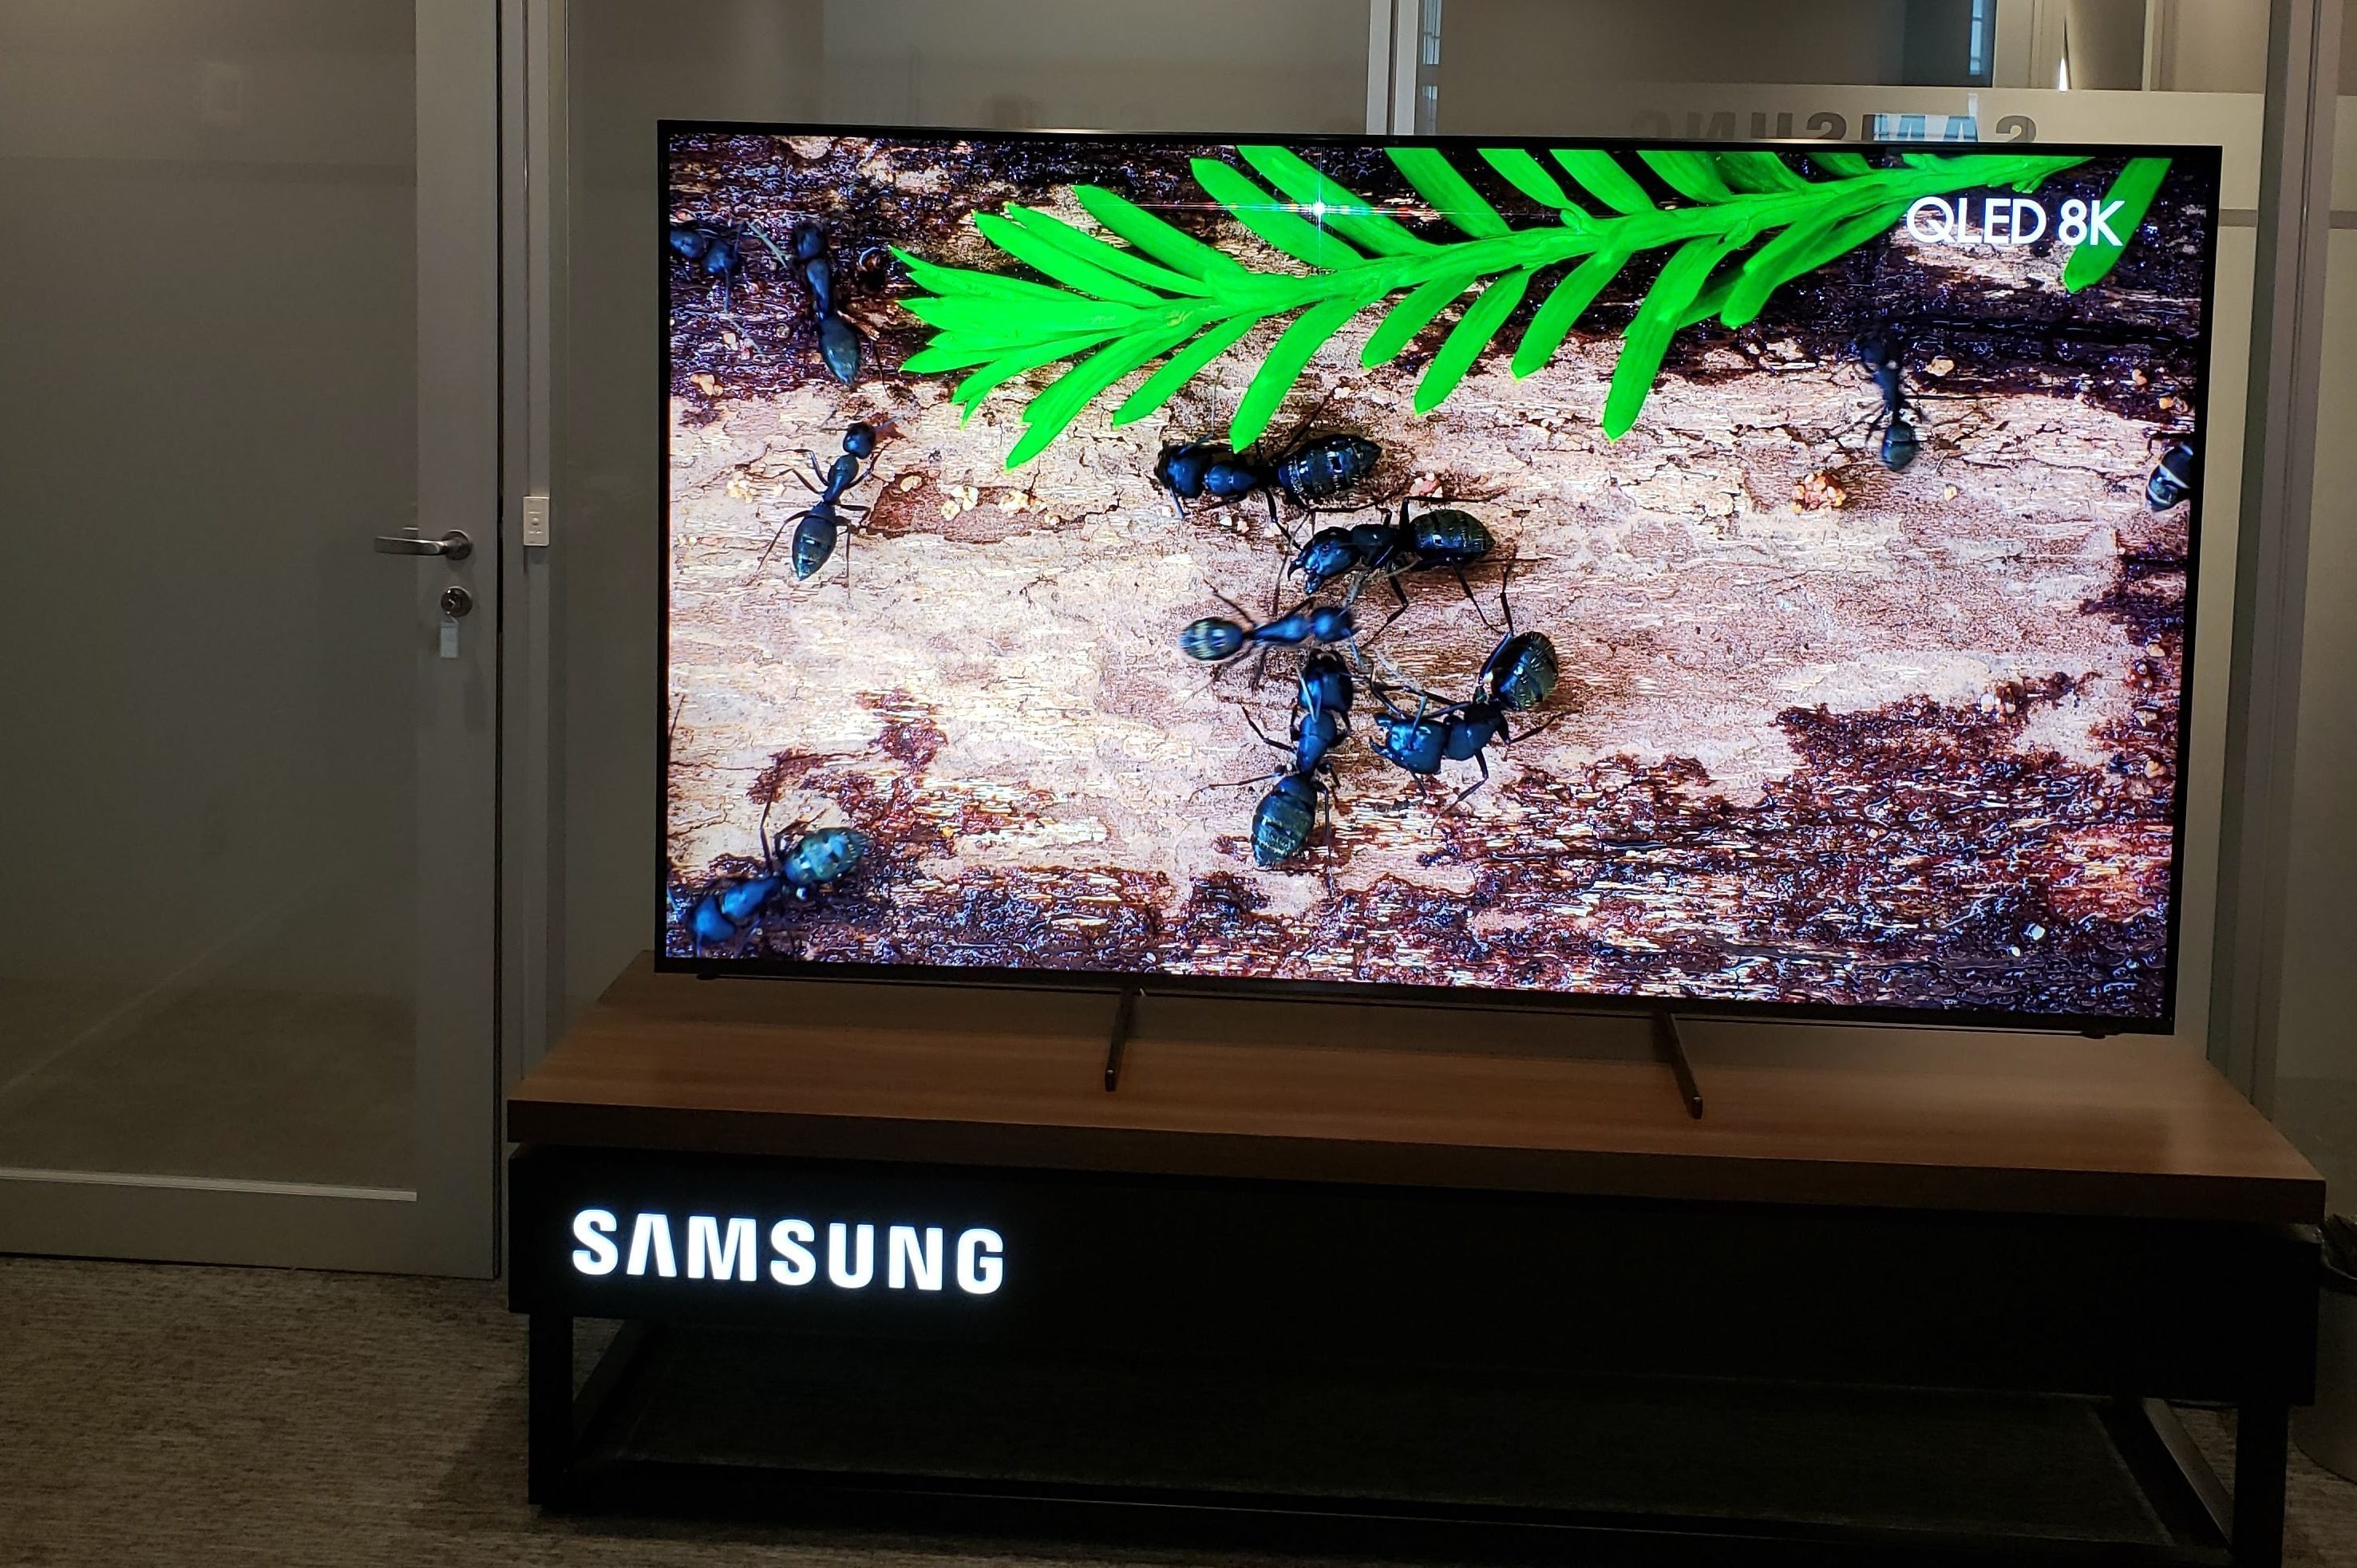 TV QLED 8K Samsung